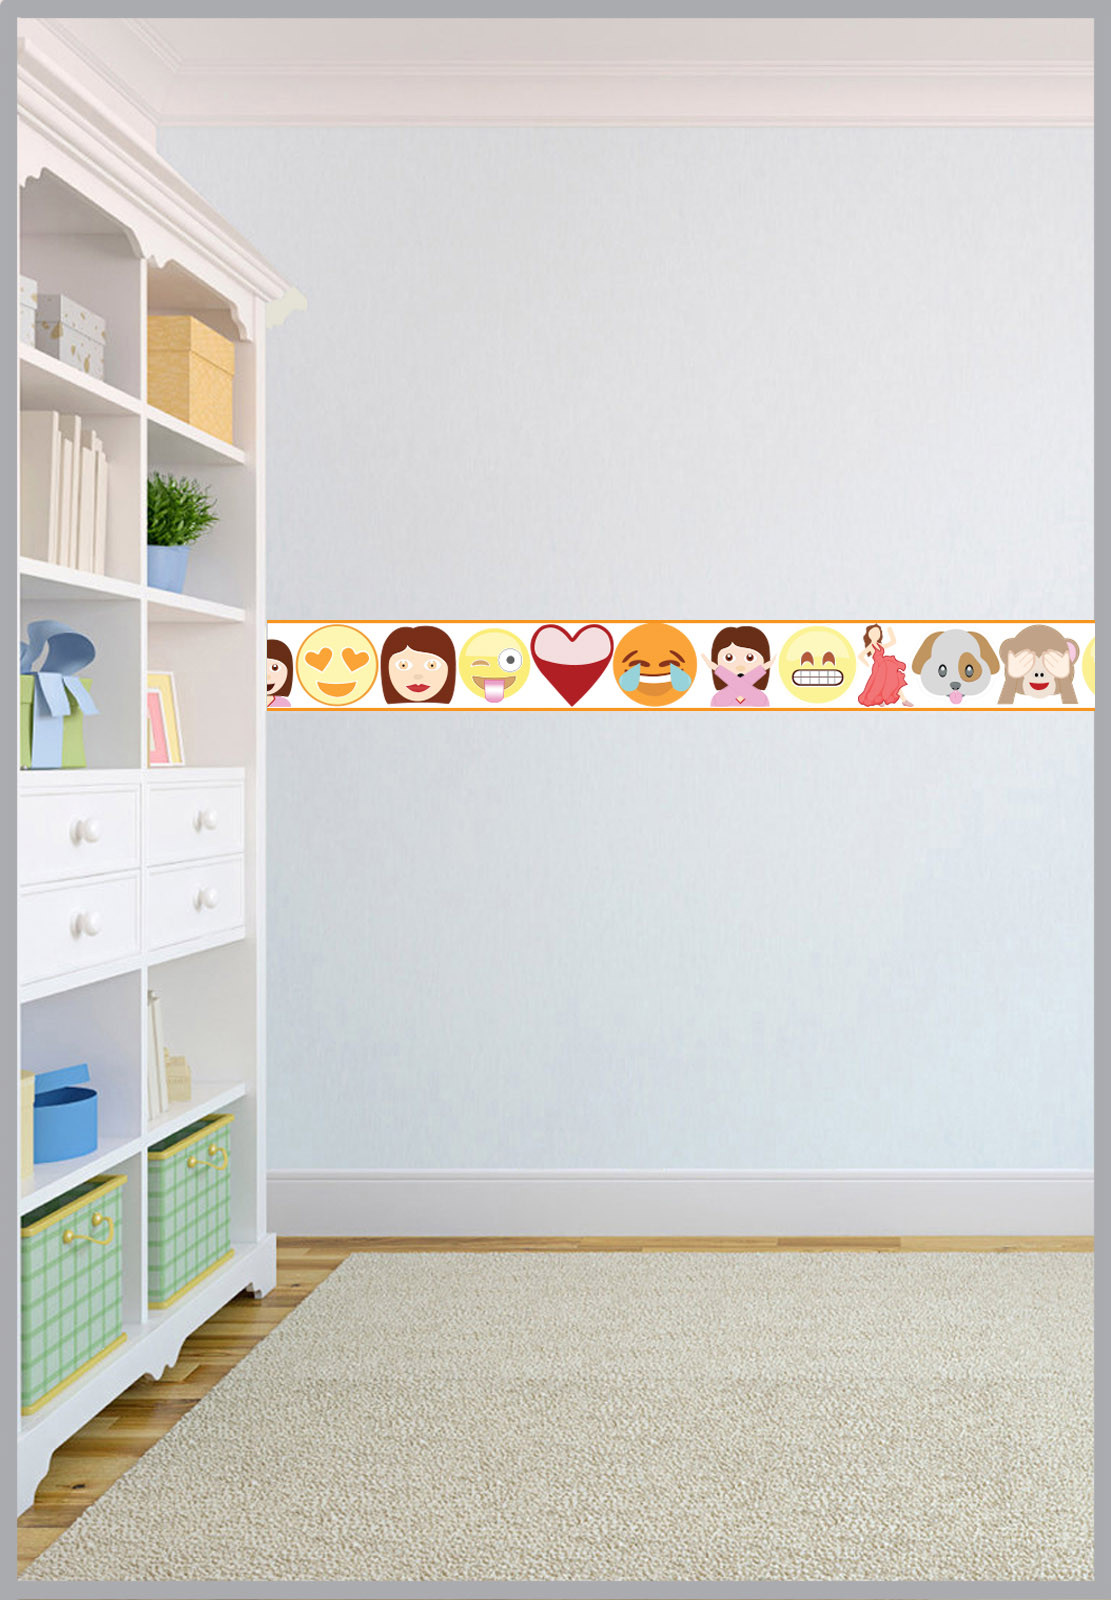 Emoji Wallpaper For Bedroom
 Children s Emoji Design Bedding Bedroom Collection